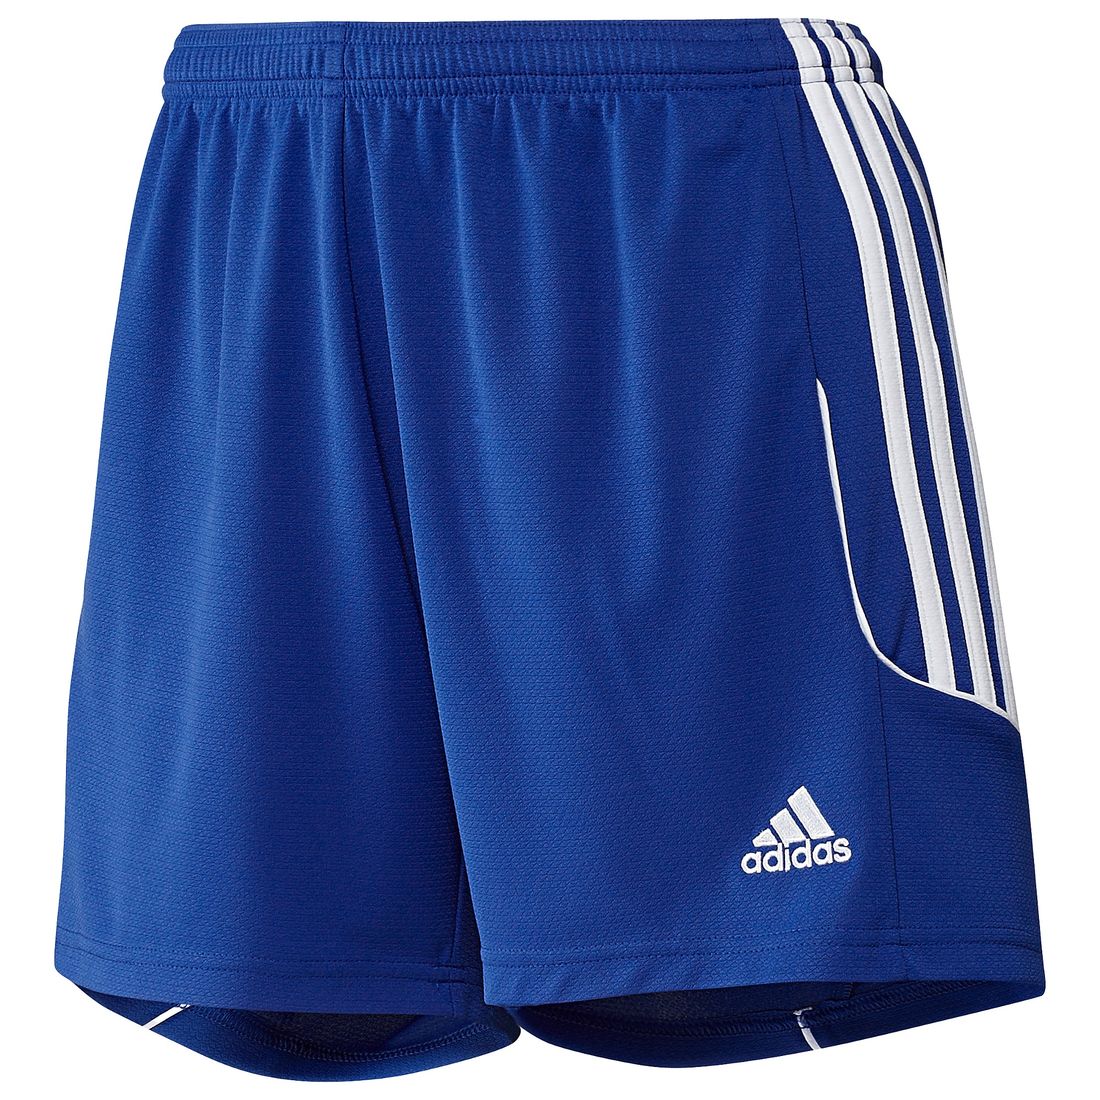 adidas Women's Squadra 13 Shorts - Soccer Premier